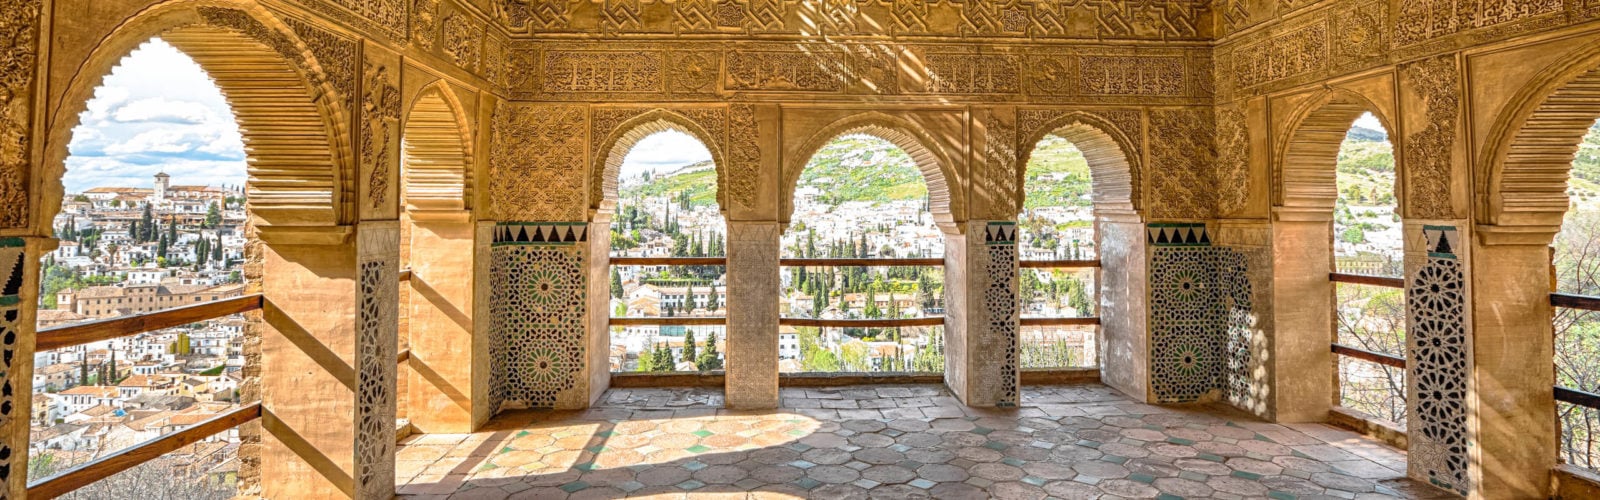 alhambra-palace-granada-spain